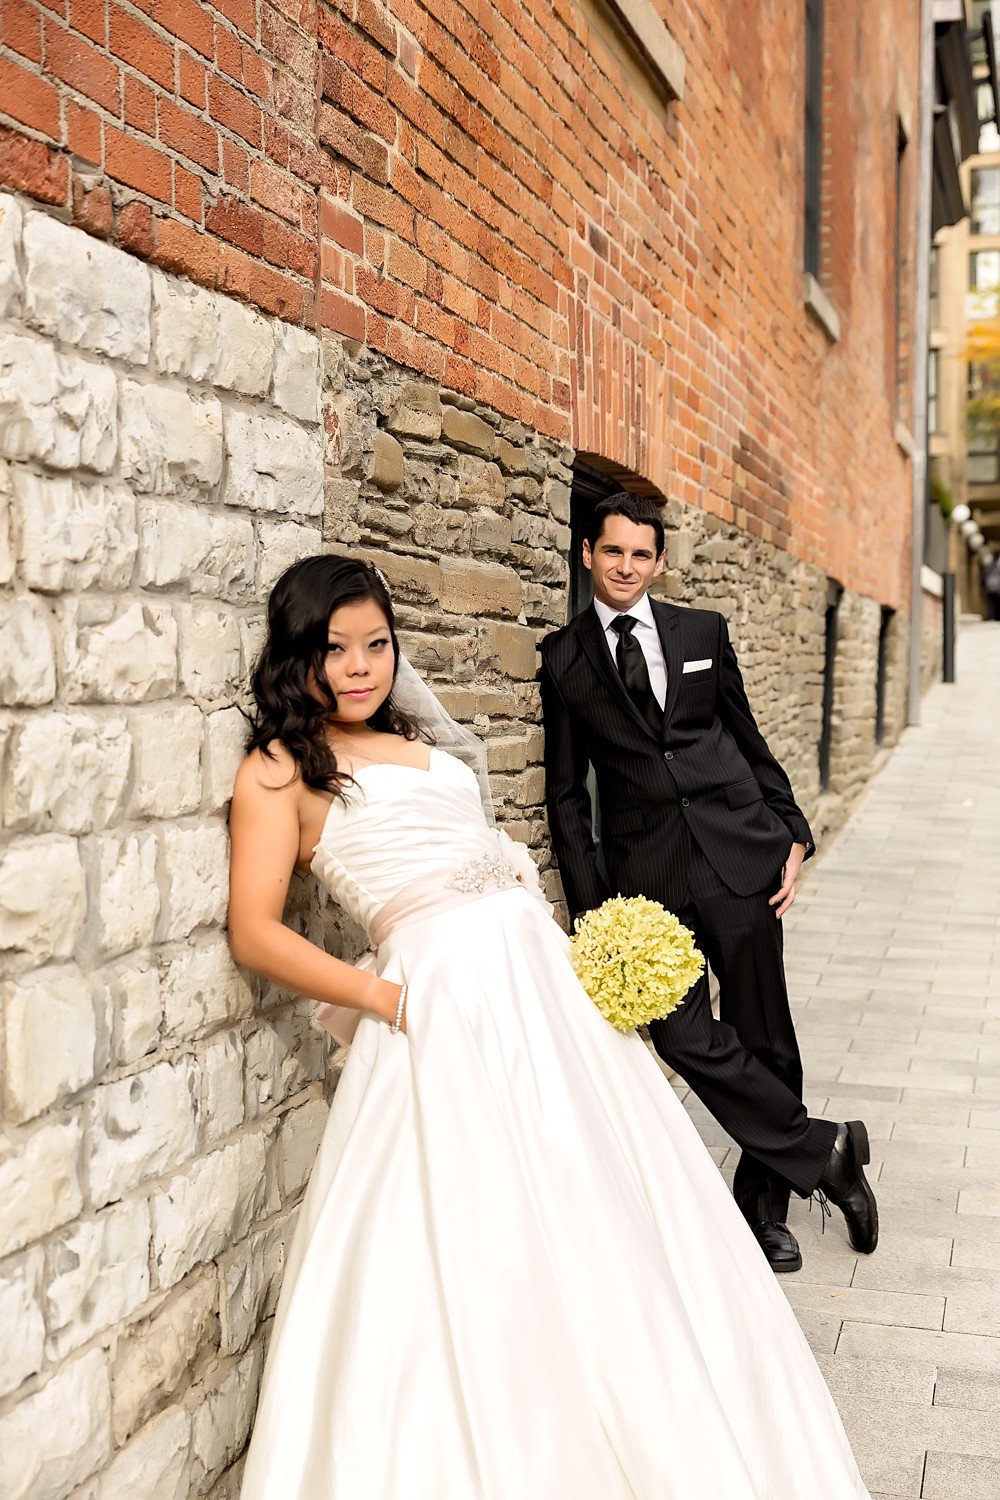 Luke & Tiffany Bridal Wedding Shoot at Cherry Beach Toronto Ontario Wedding Photographer